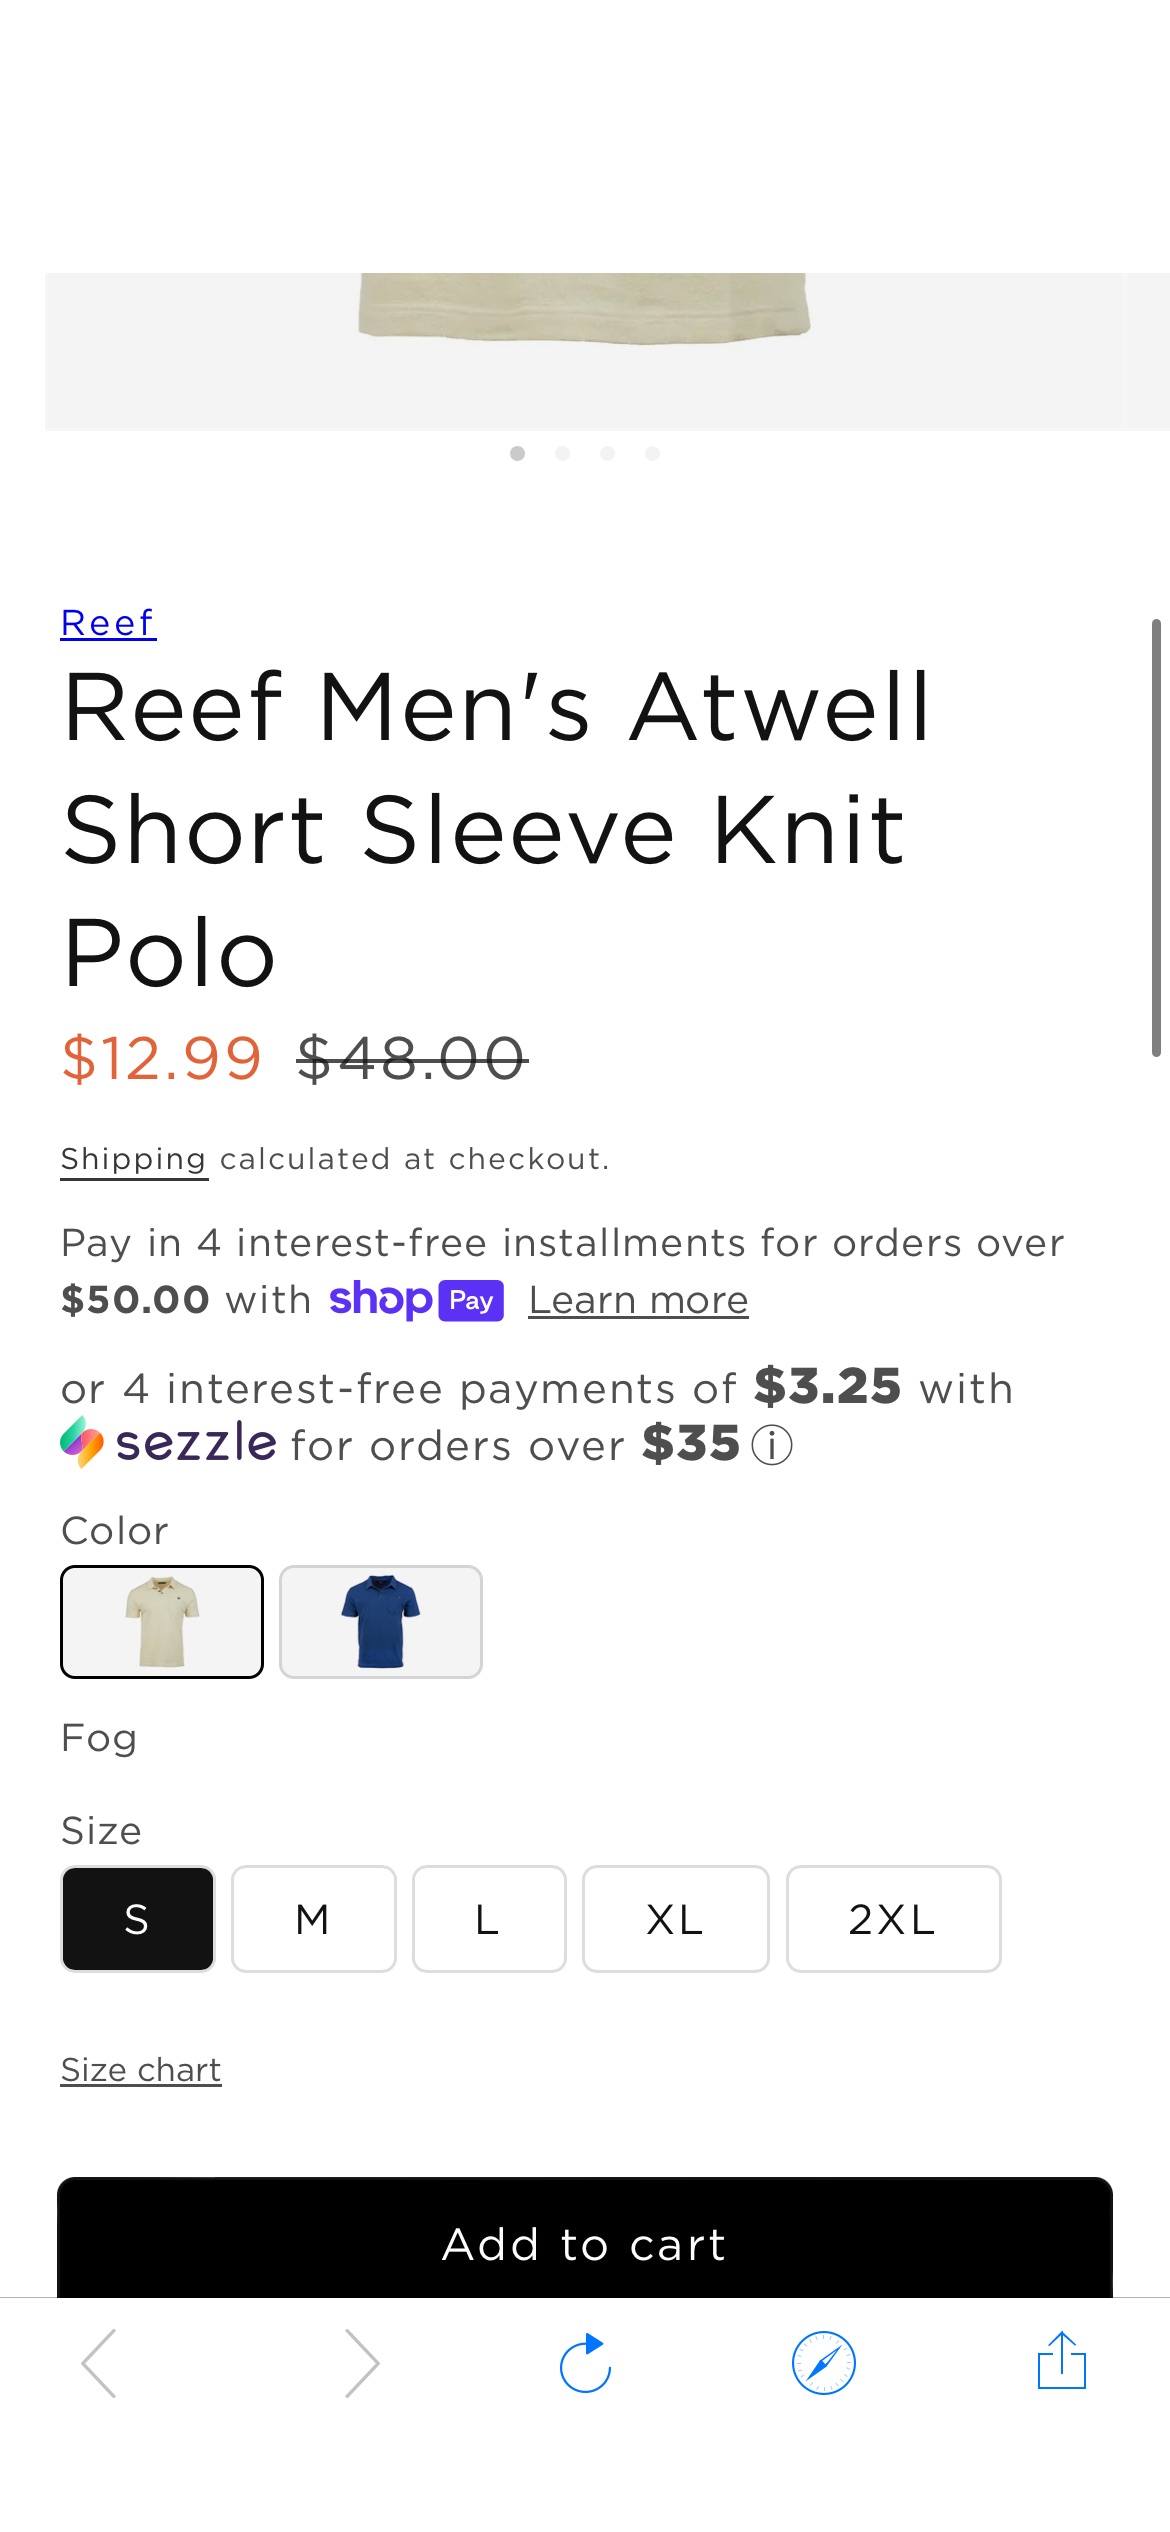 Reef Men's Atwell Short Sleeve Knit Polo – PROOZY Proozy：你最喜欢的商品正在等待......额外享受15%的折扣！

在你最喜欢的款式消失之前，抓住Reef Men's Atwell短袖针织马球（12.99美元）！

代码：NMMP5MJ7